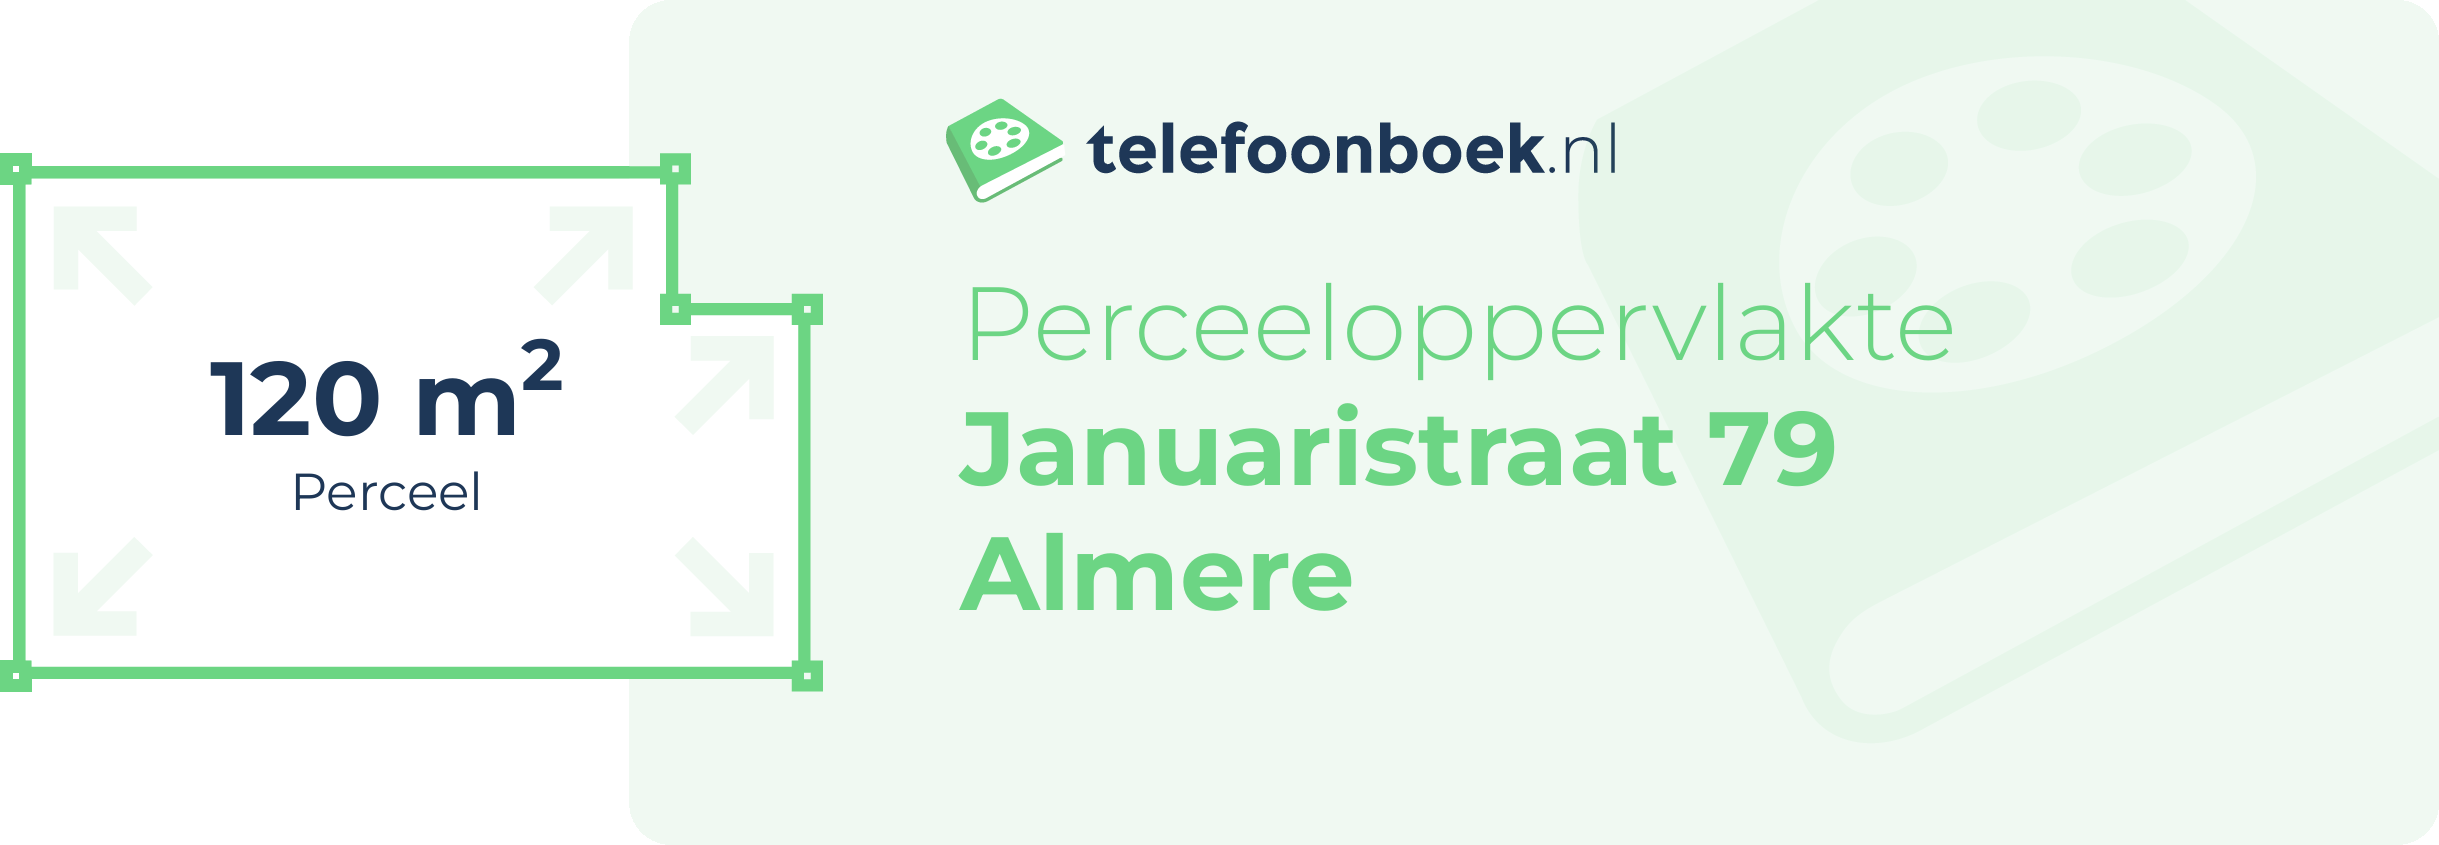 Perceeloppervlakte Januaristraat 79 Almere